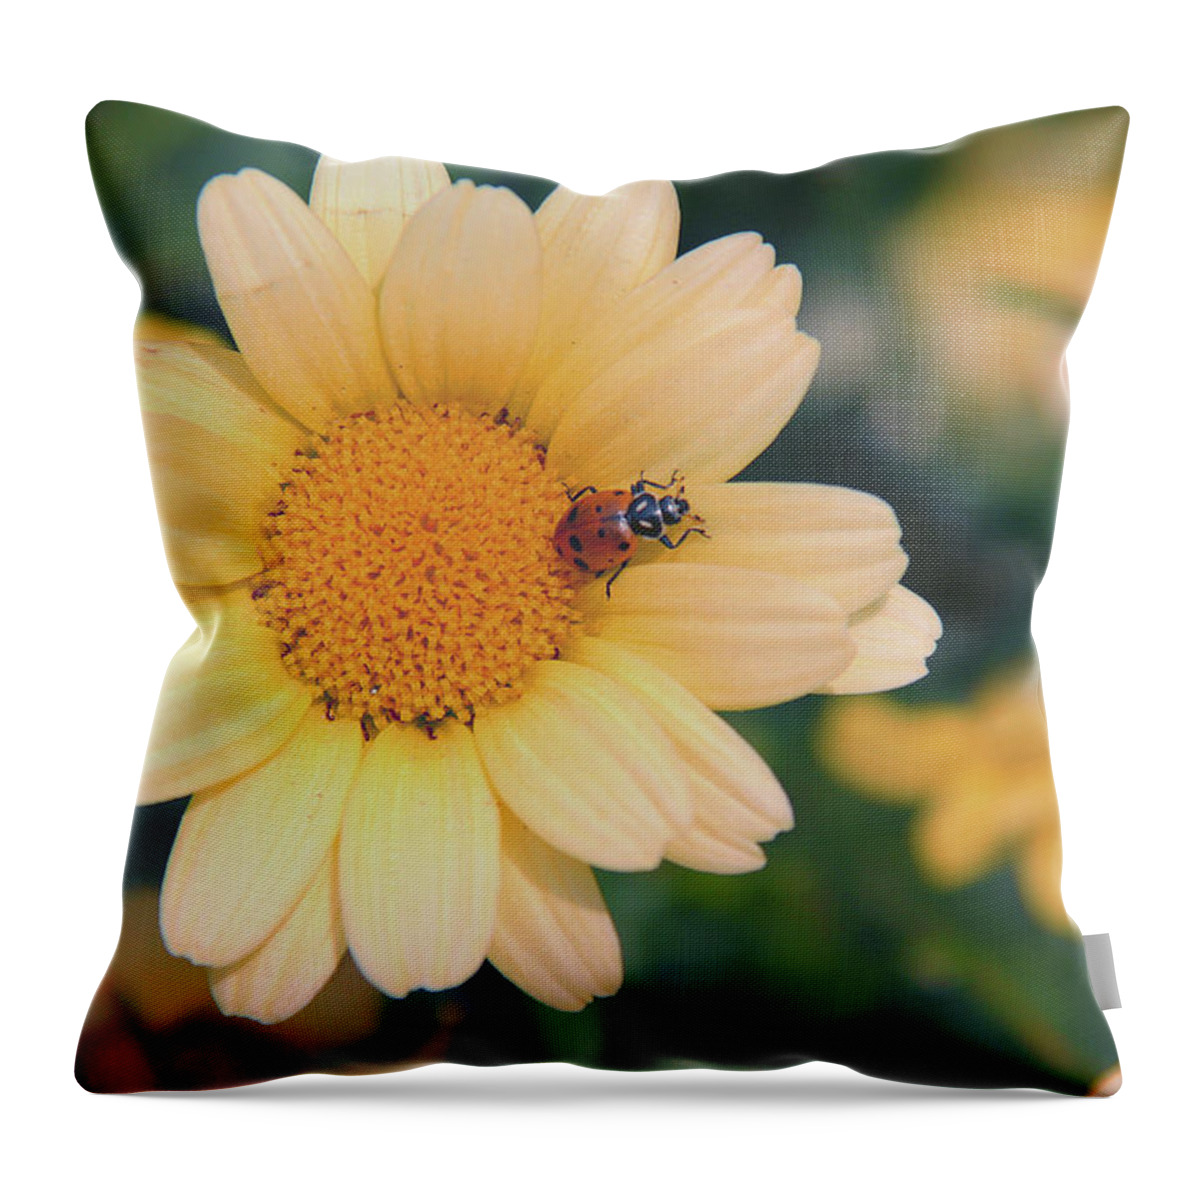 Daisy Throw Pillow featuring the photograph Daisy Ladybug by Nancy Dunivin